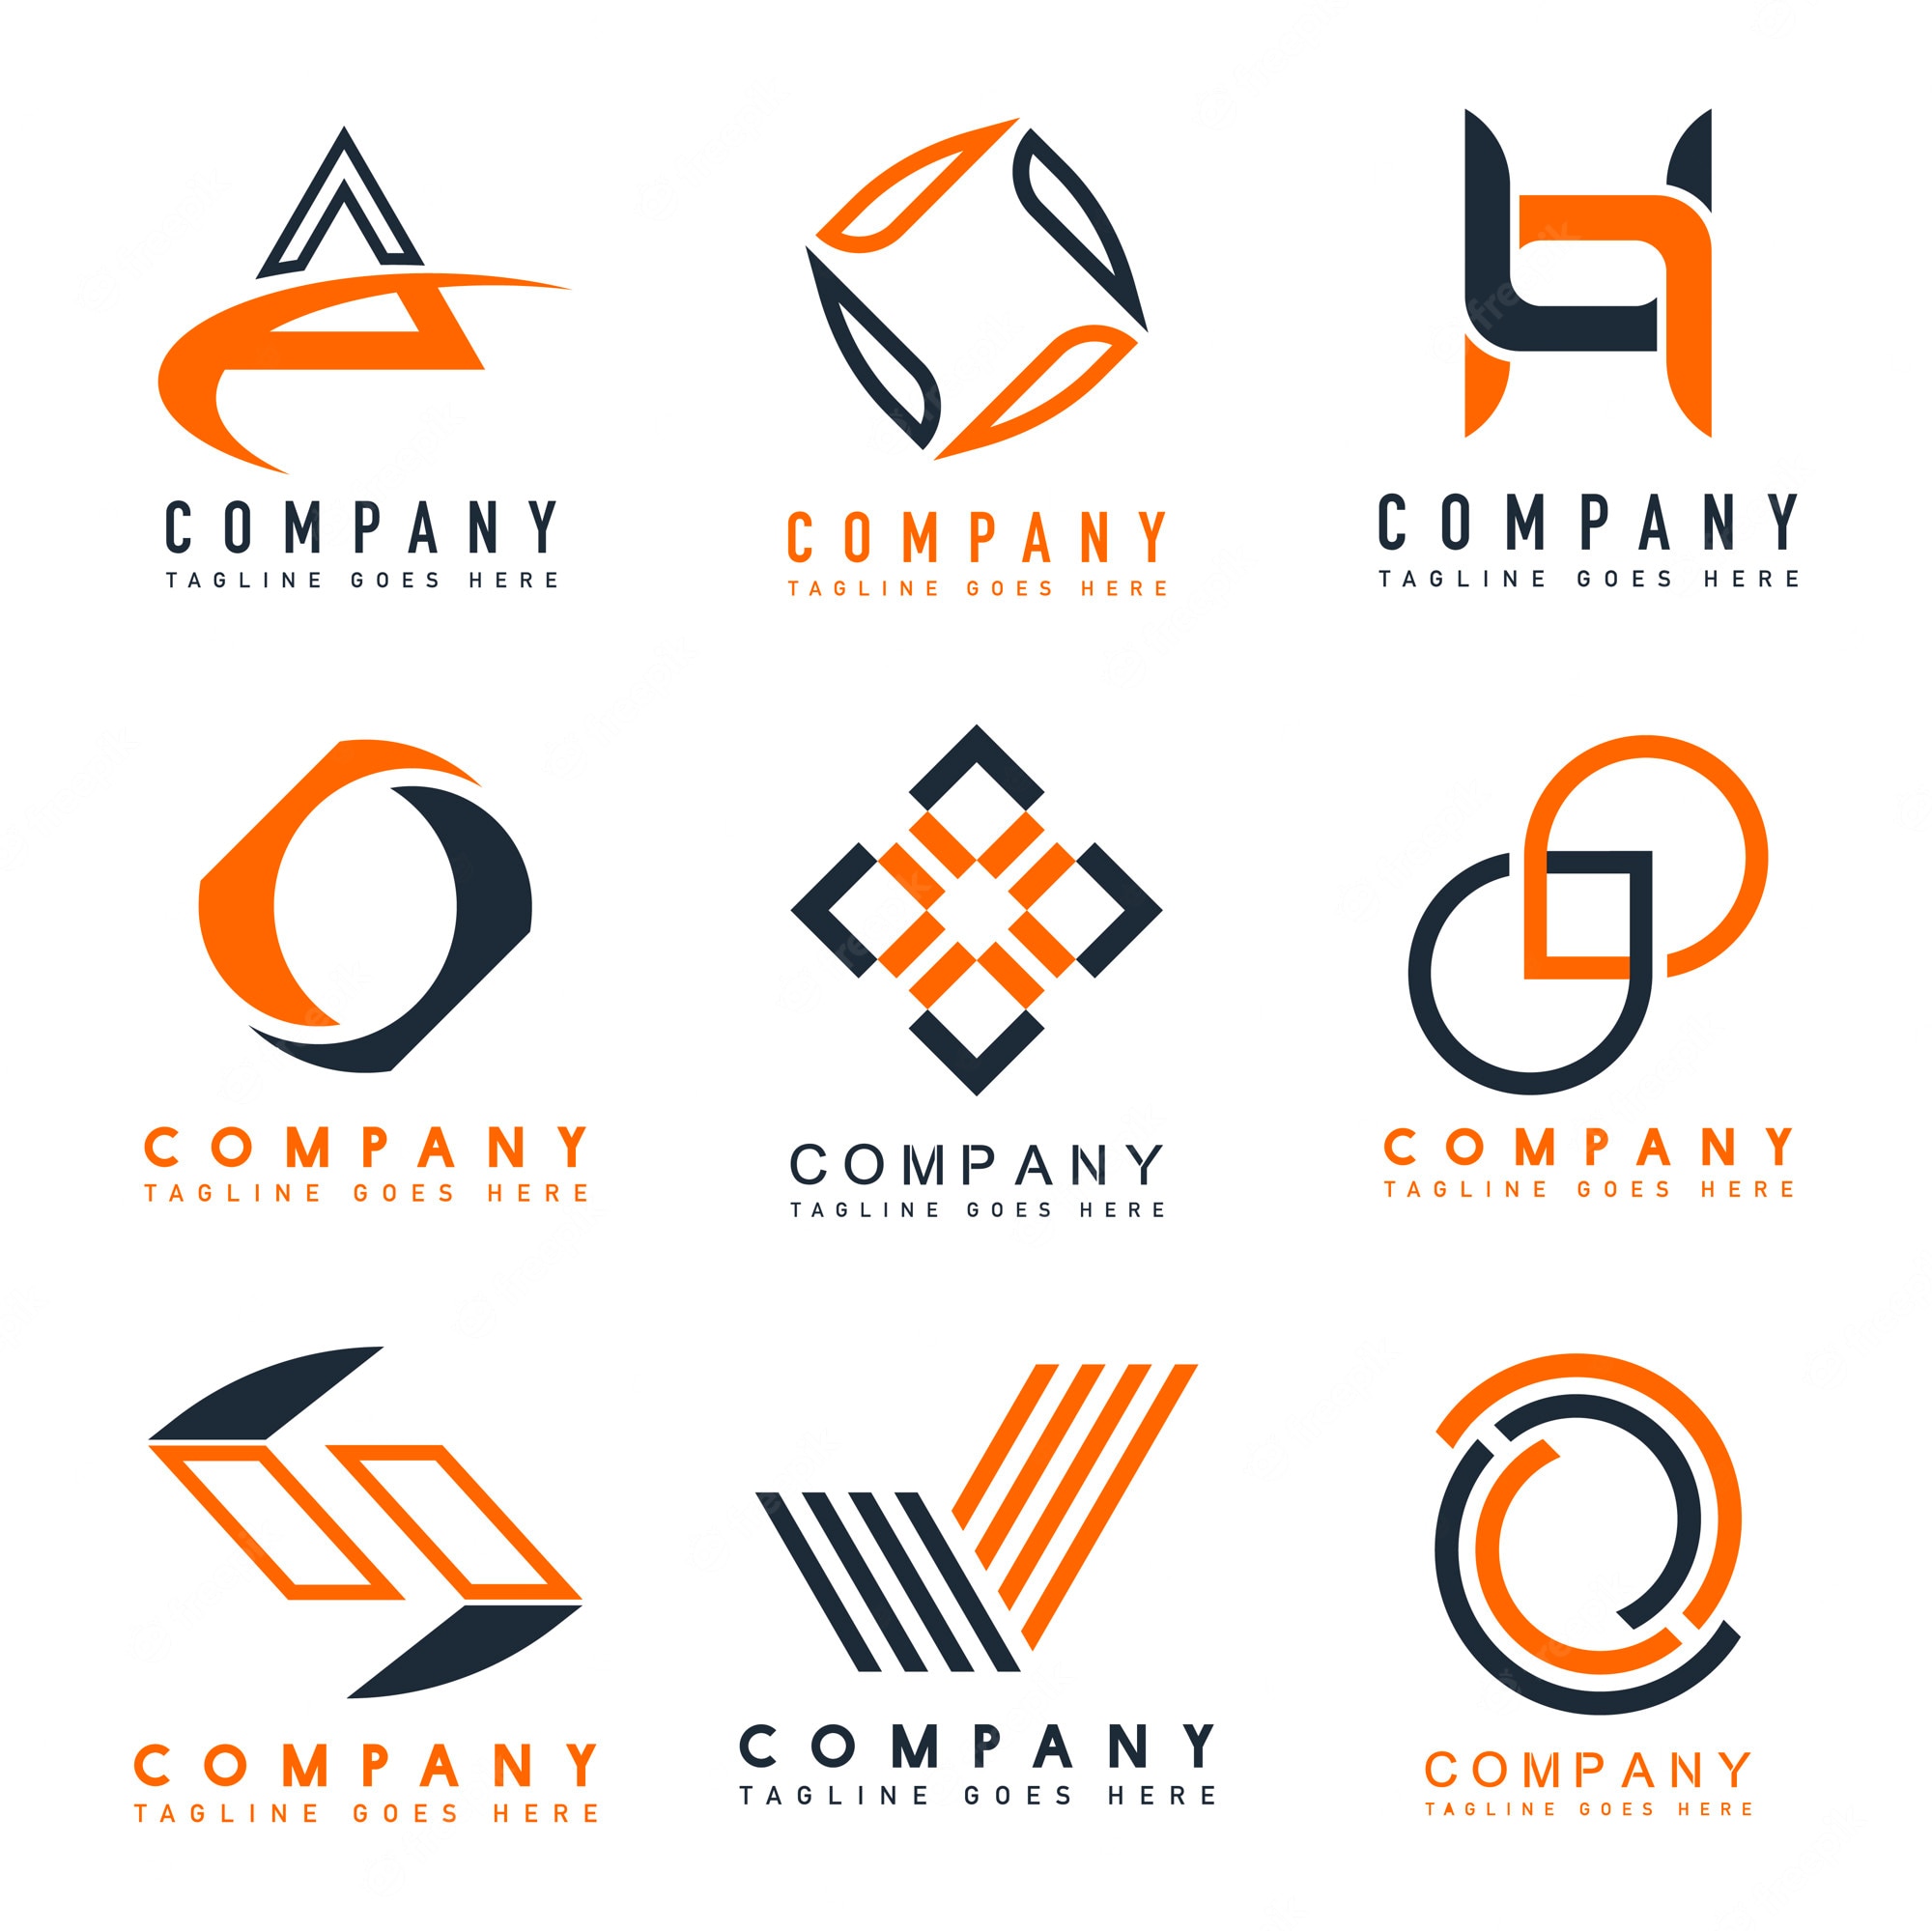 Logo Shapes Image. Free Vectors, & PSD